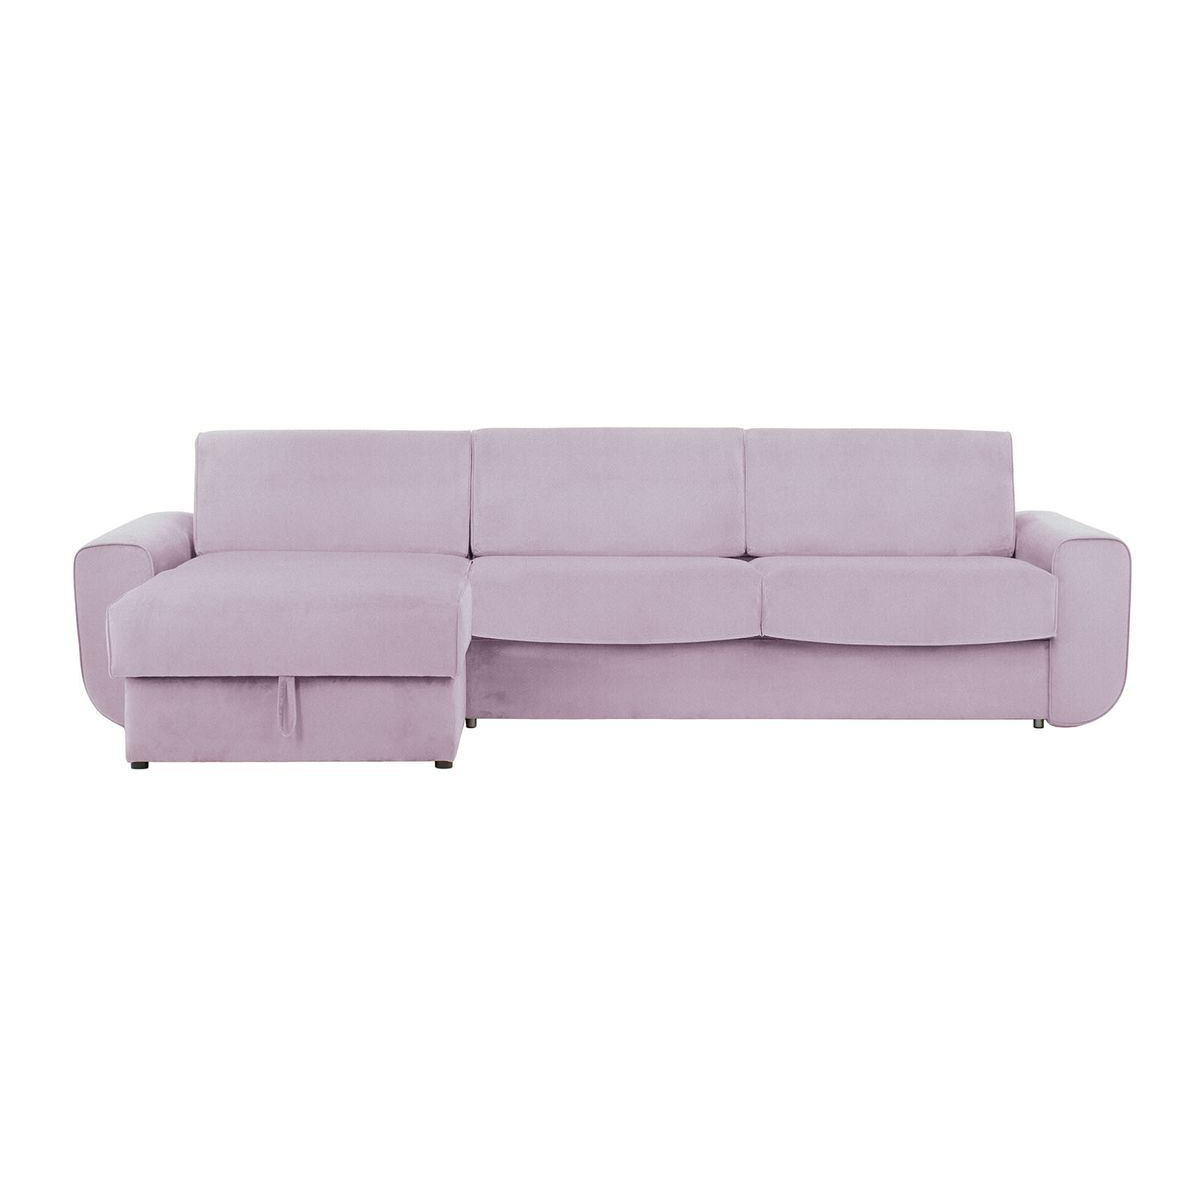 Salsa corner sofa bed with storage, lilac - image 1